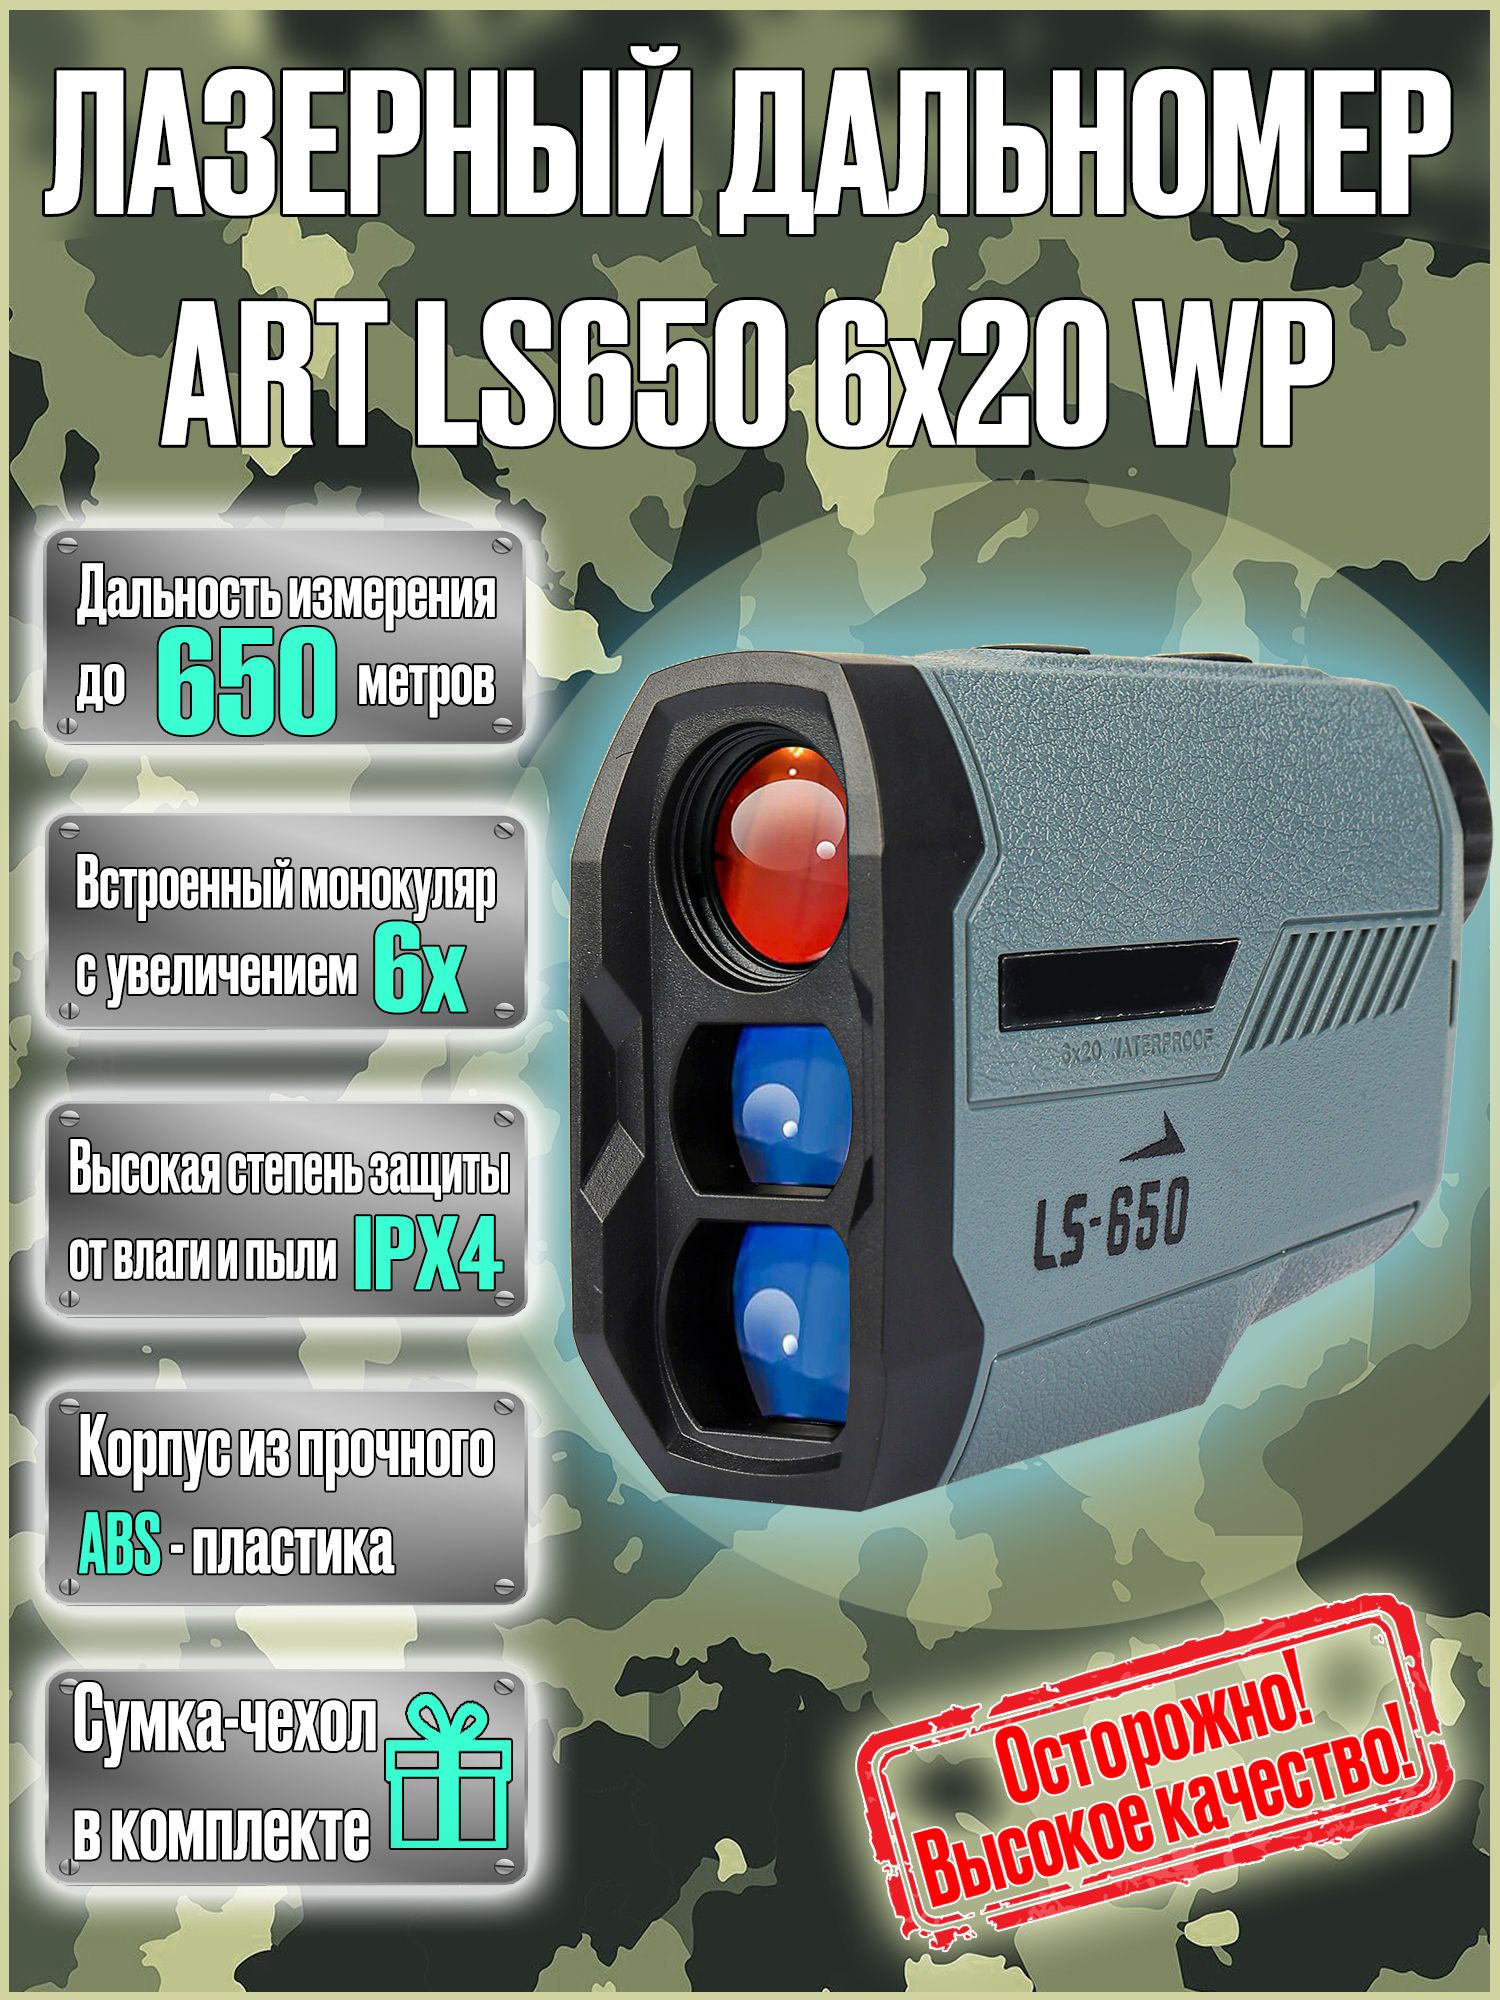 Дальномер ARTBULL LS 650 зеленый. Artbull 650